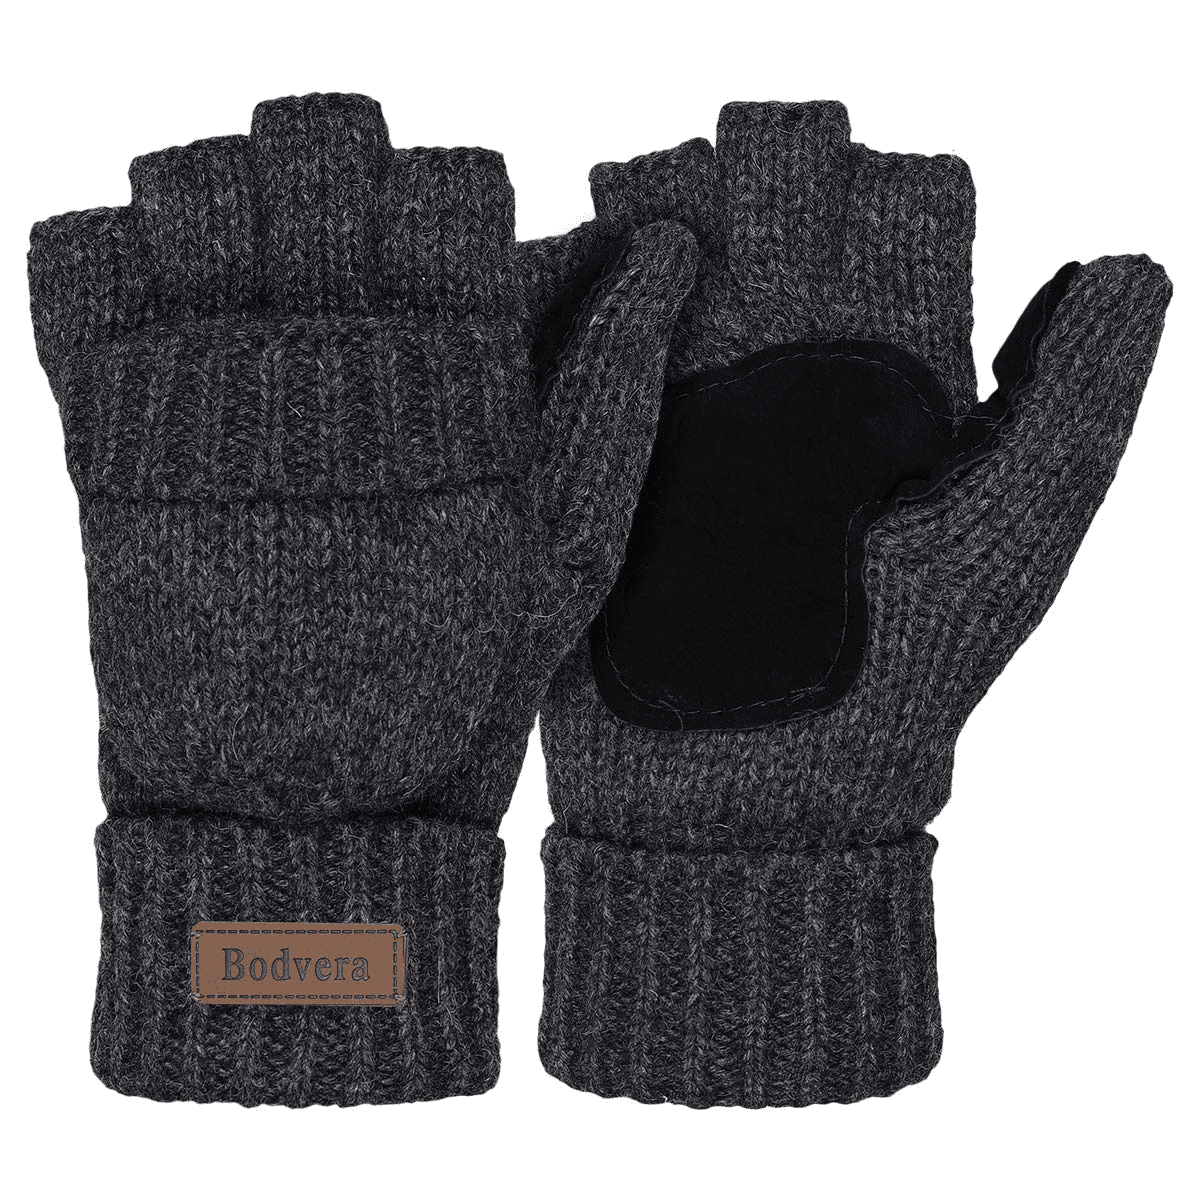 COOPLUS Winter Mittens Fingerless Gloves Wool Knitted Warm Gloves